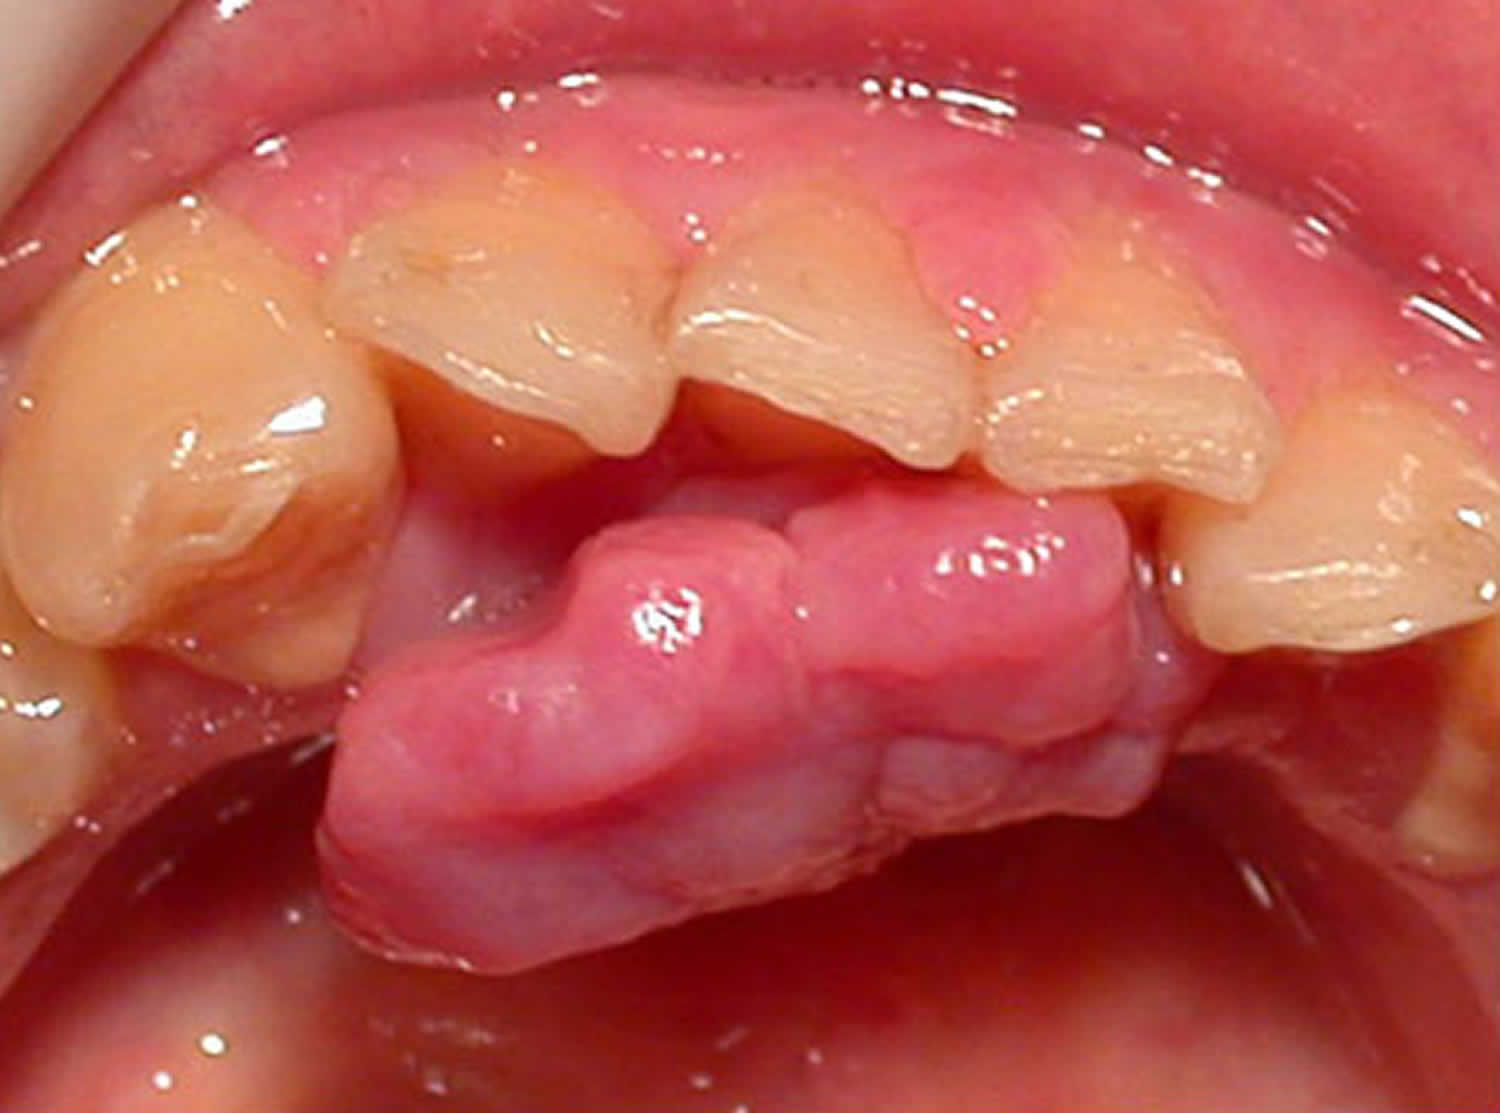 Pyogenic granuloma gums